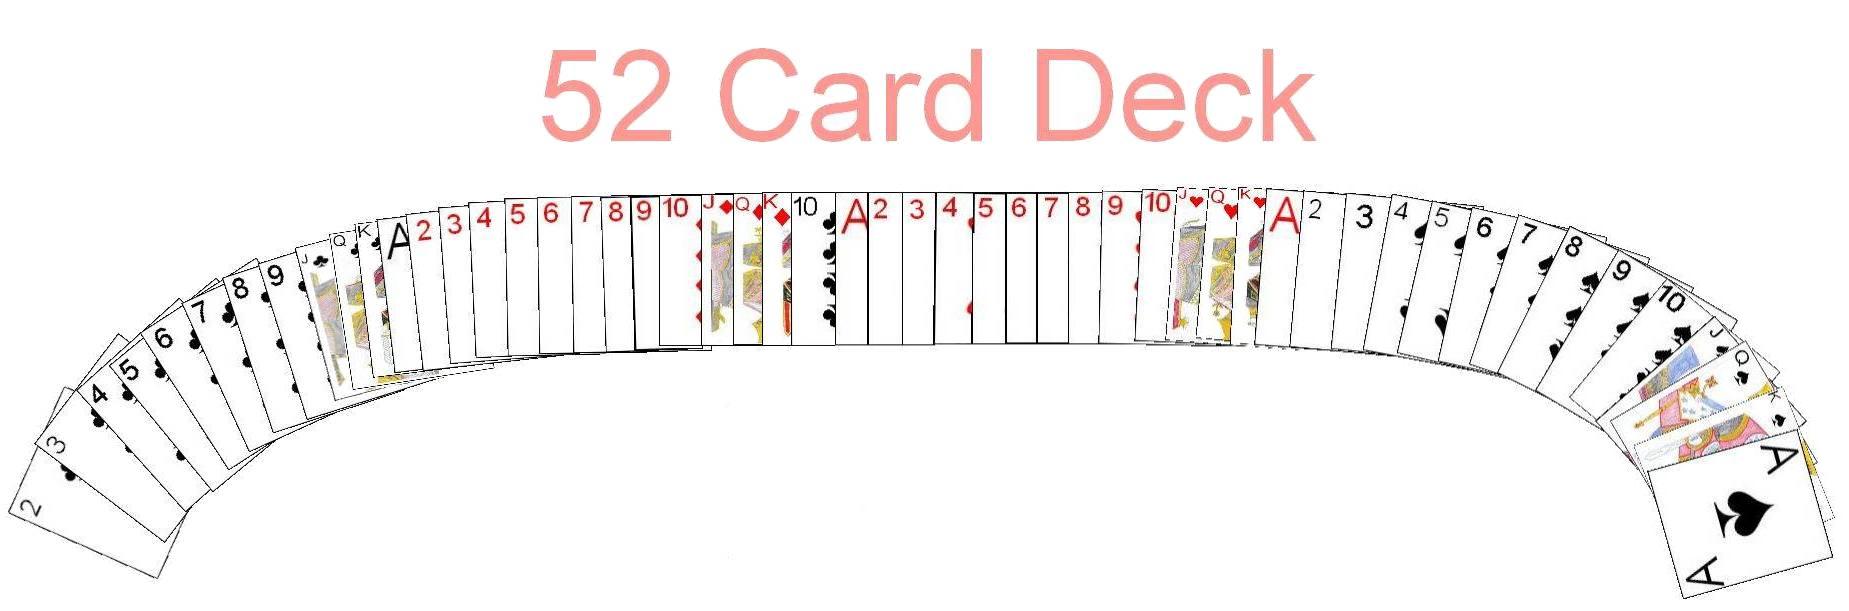 deck of cards online random